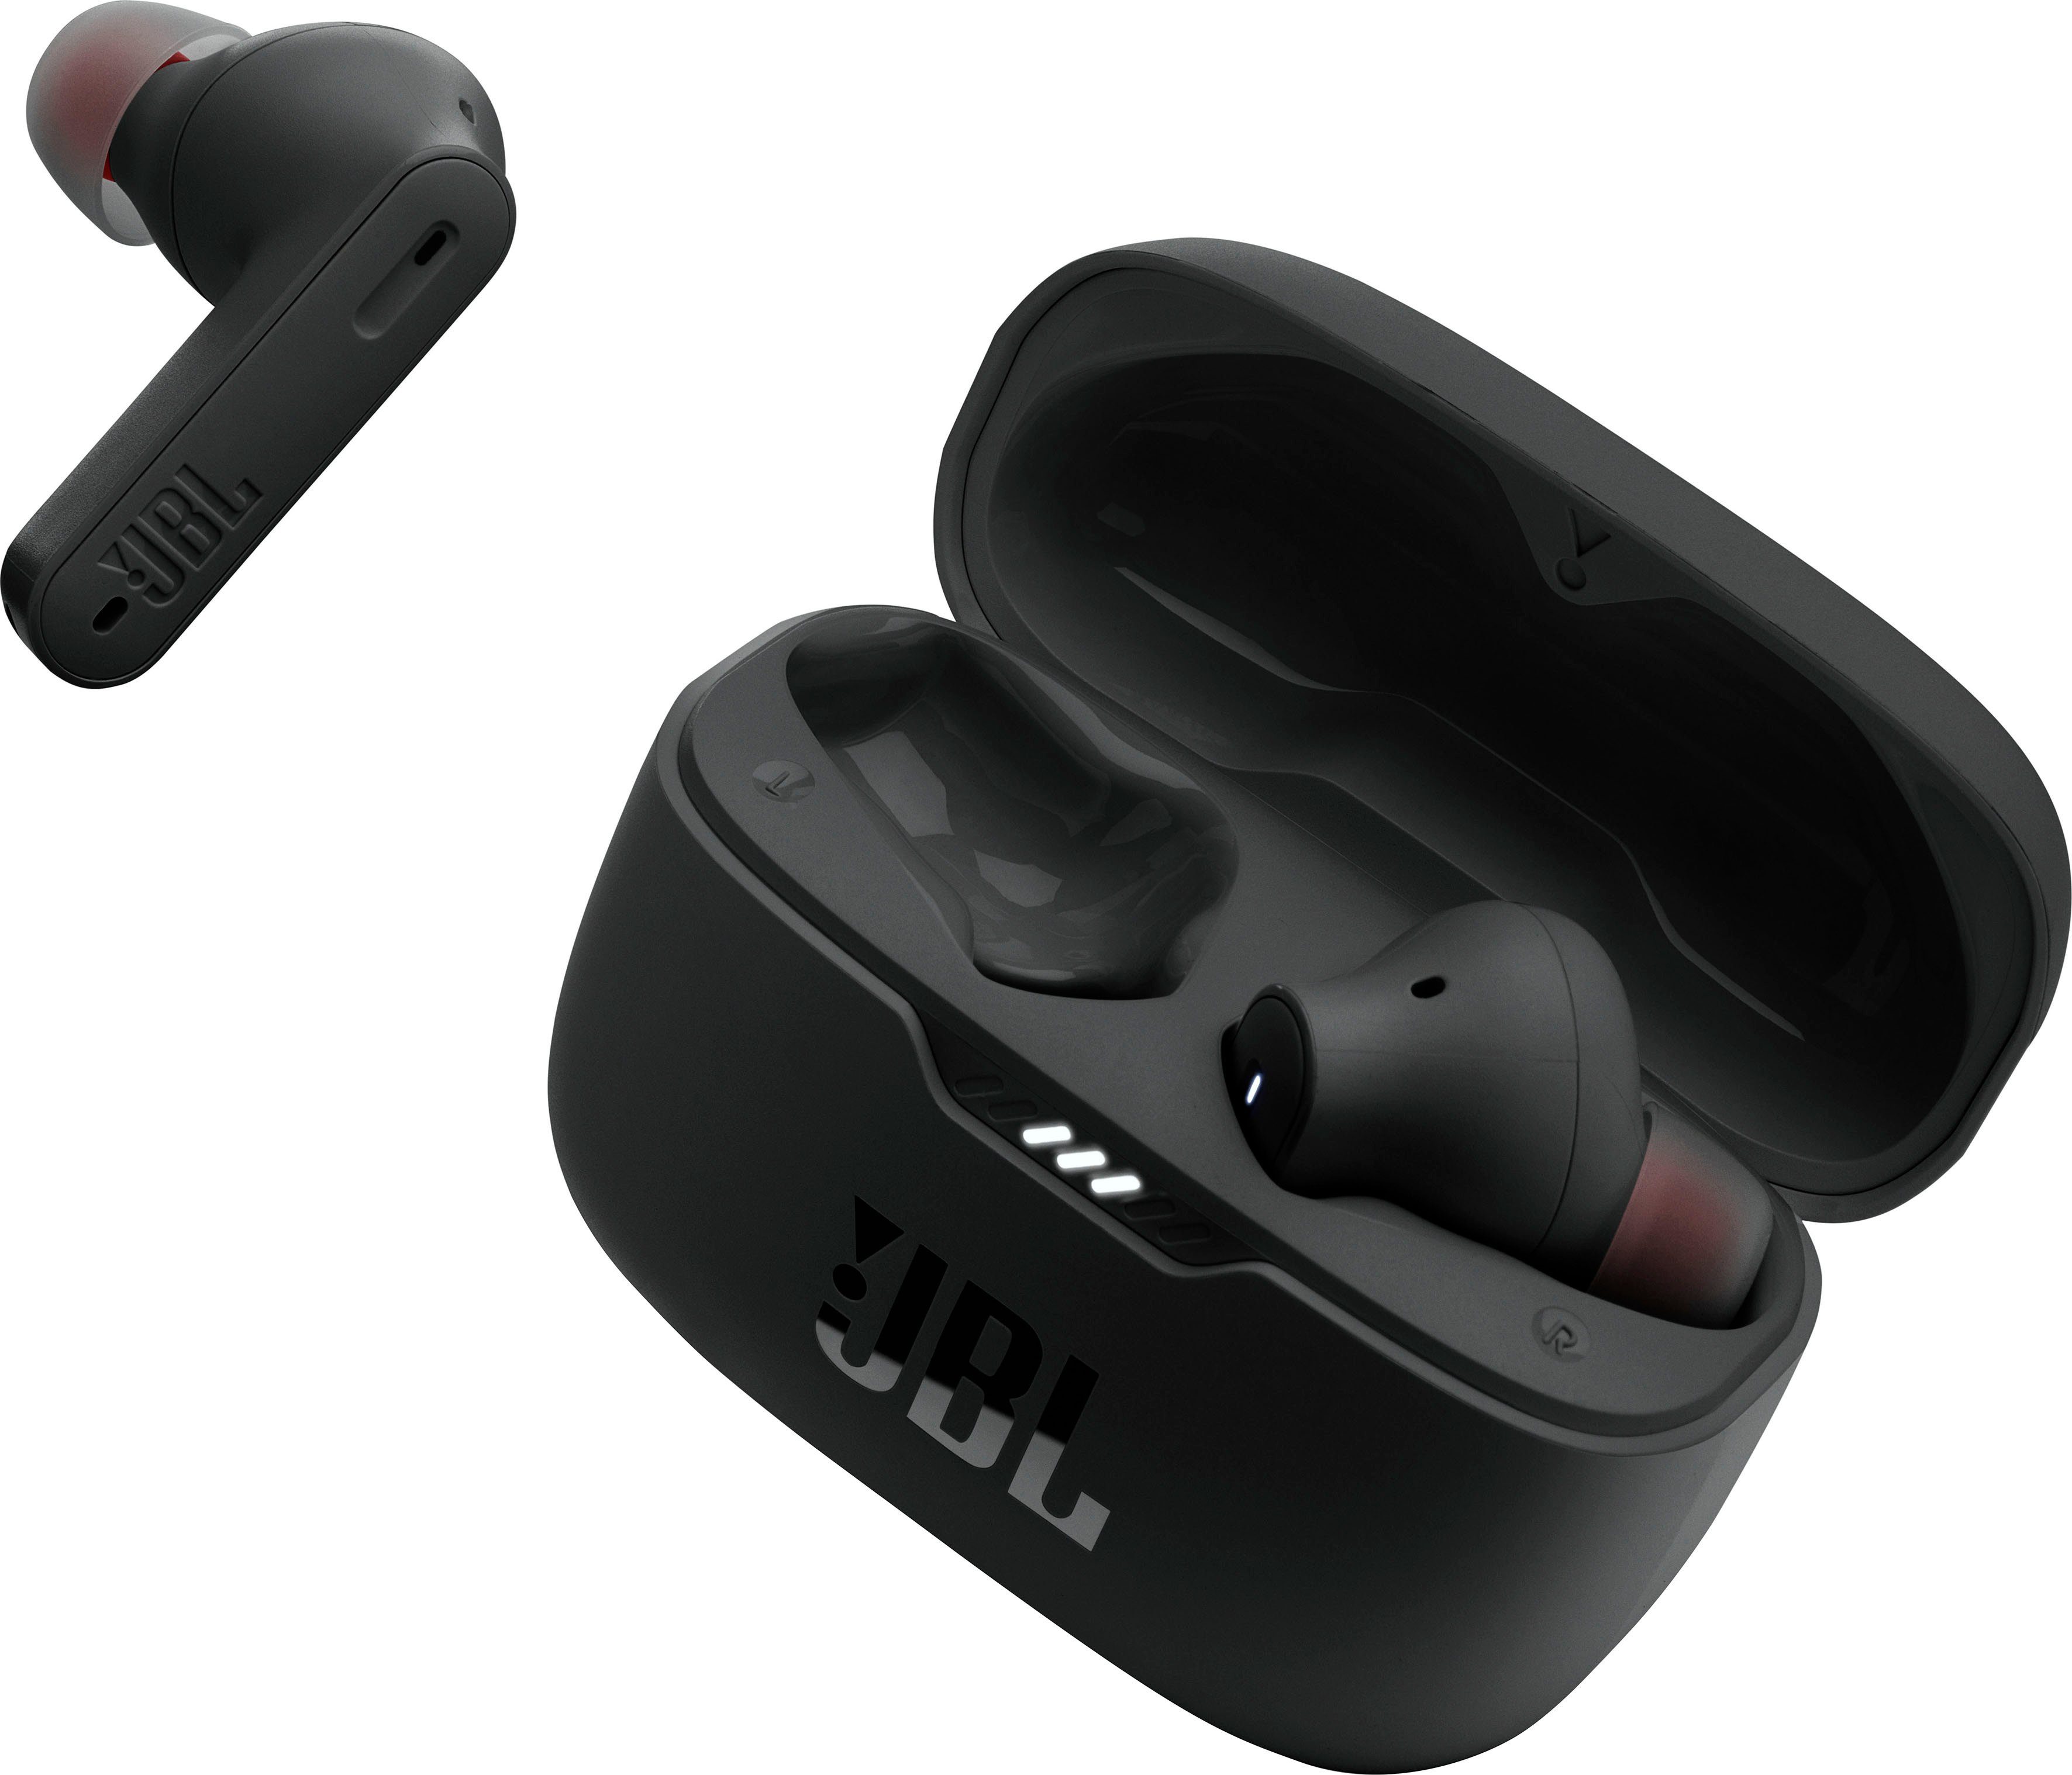 Cancelling 230NC Tune Wireless, In-Ear-Kopfhörer JBL schwarz TWS Noise (Active True Bluetooth) (ANC),